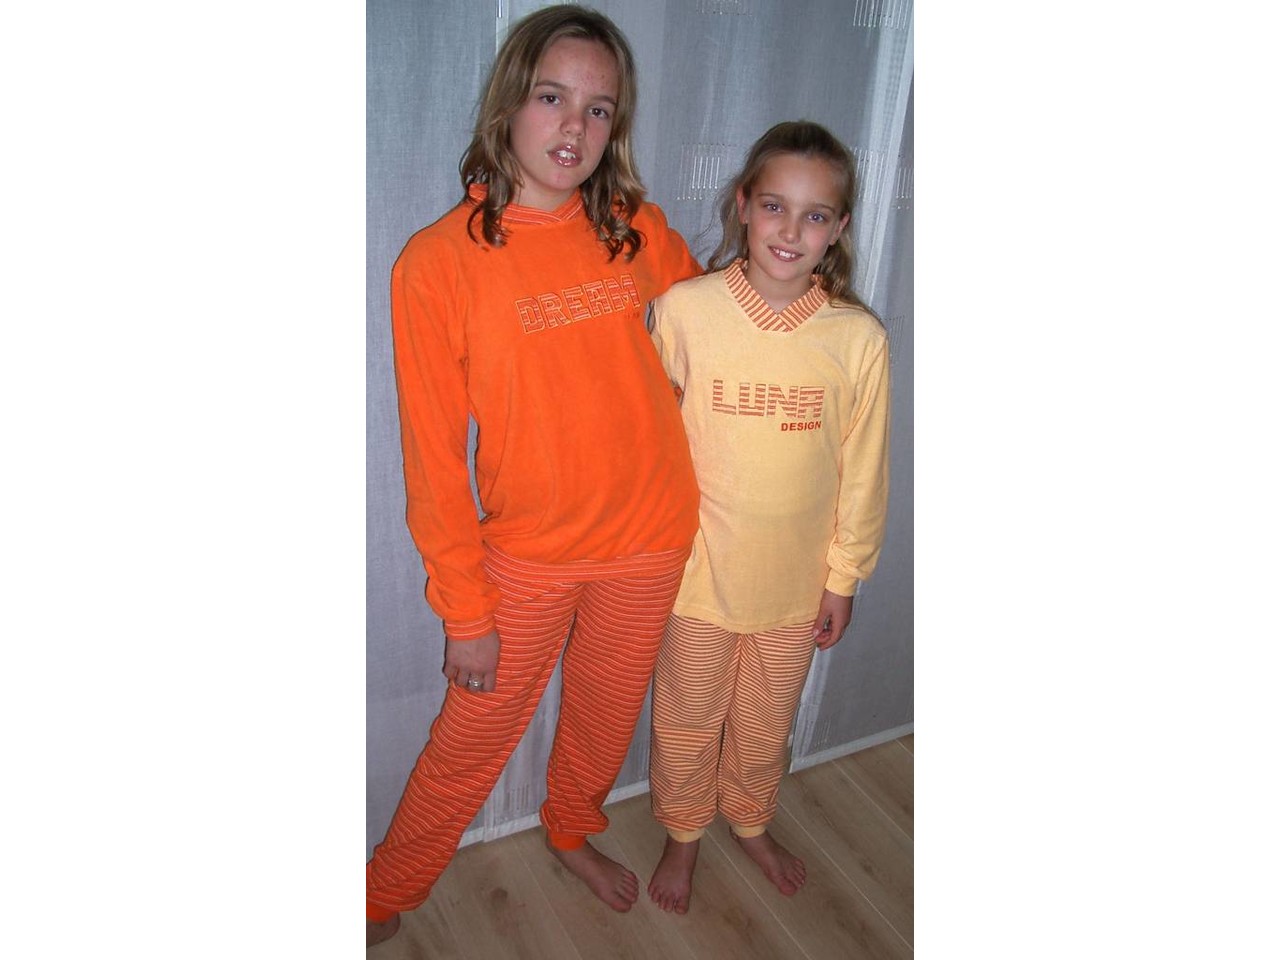 Slechthorend servet accent Lunatex Helena badstof pyjama voor meisjes mt 128 oranje of maisgeel -  Bodyfashion Born